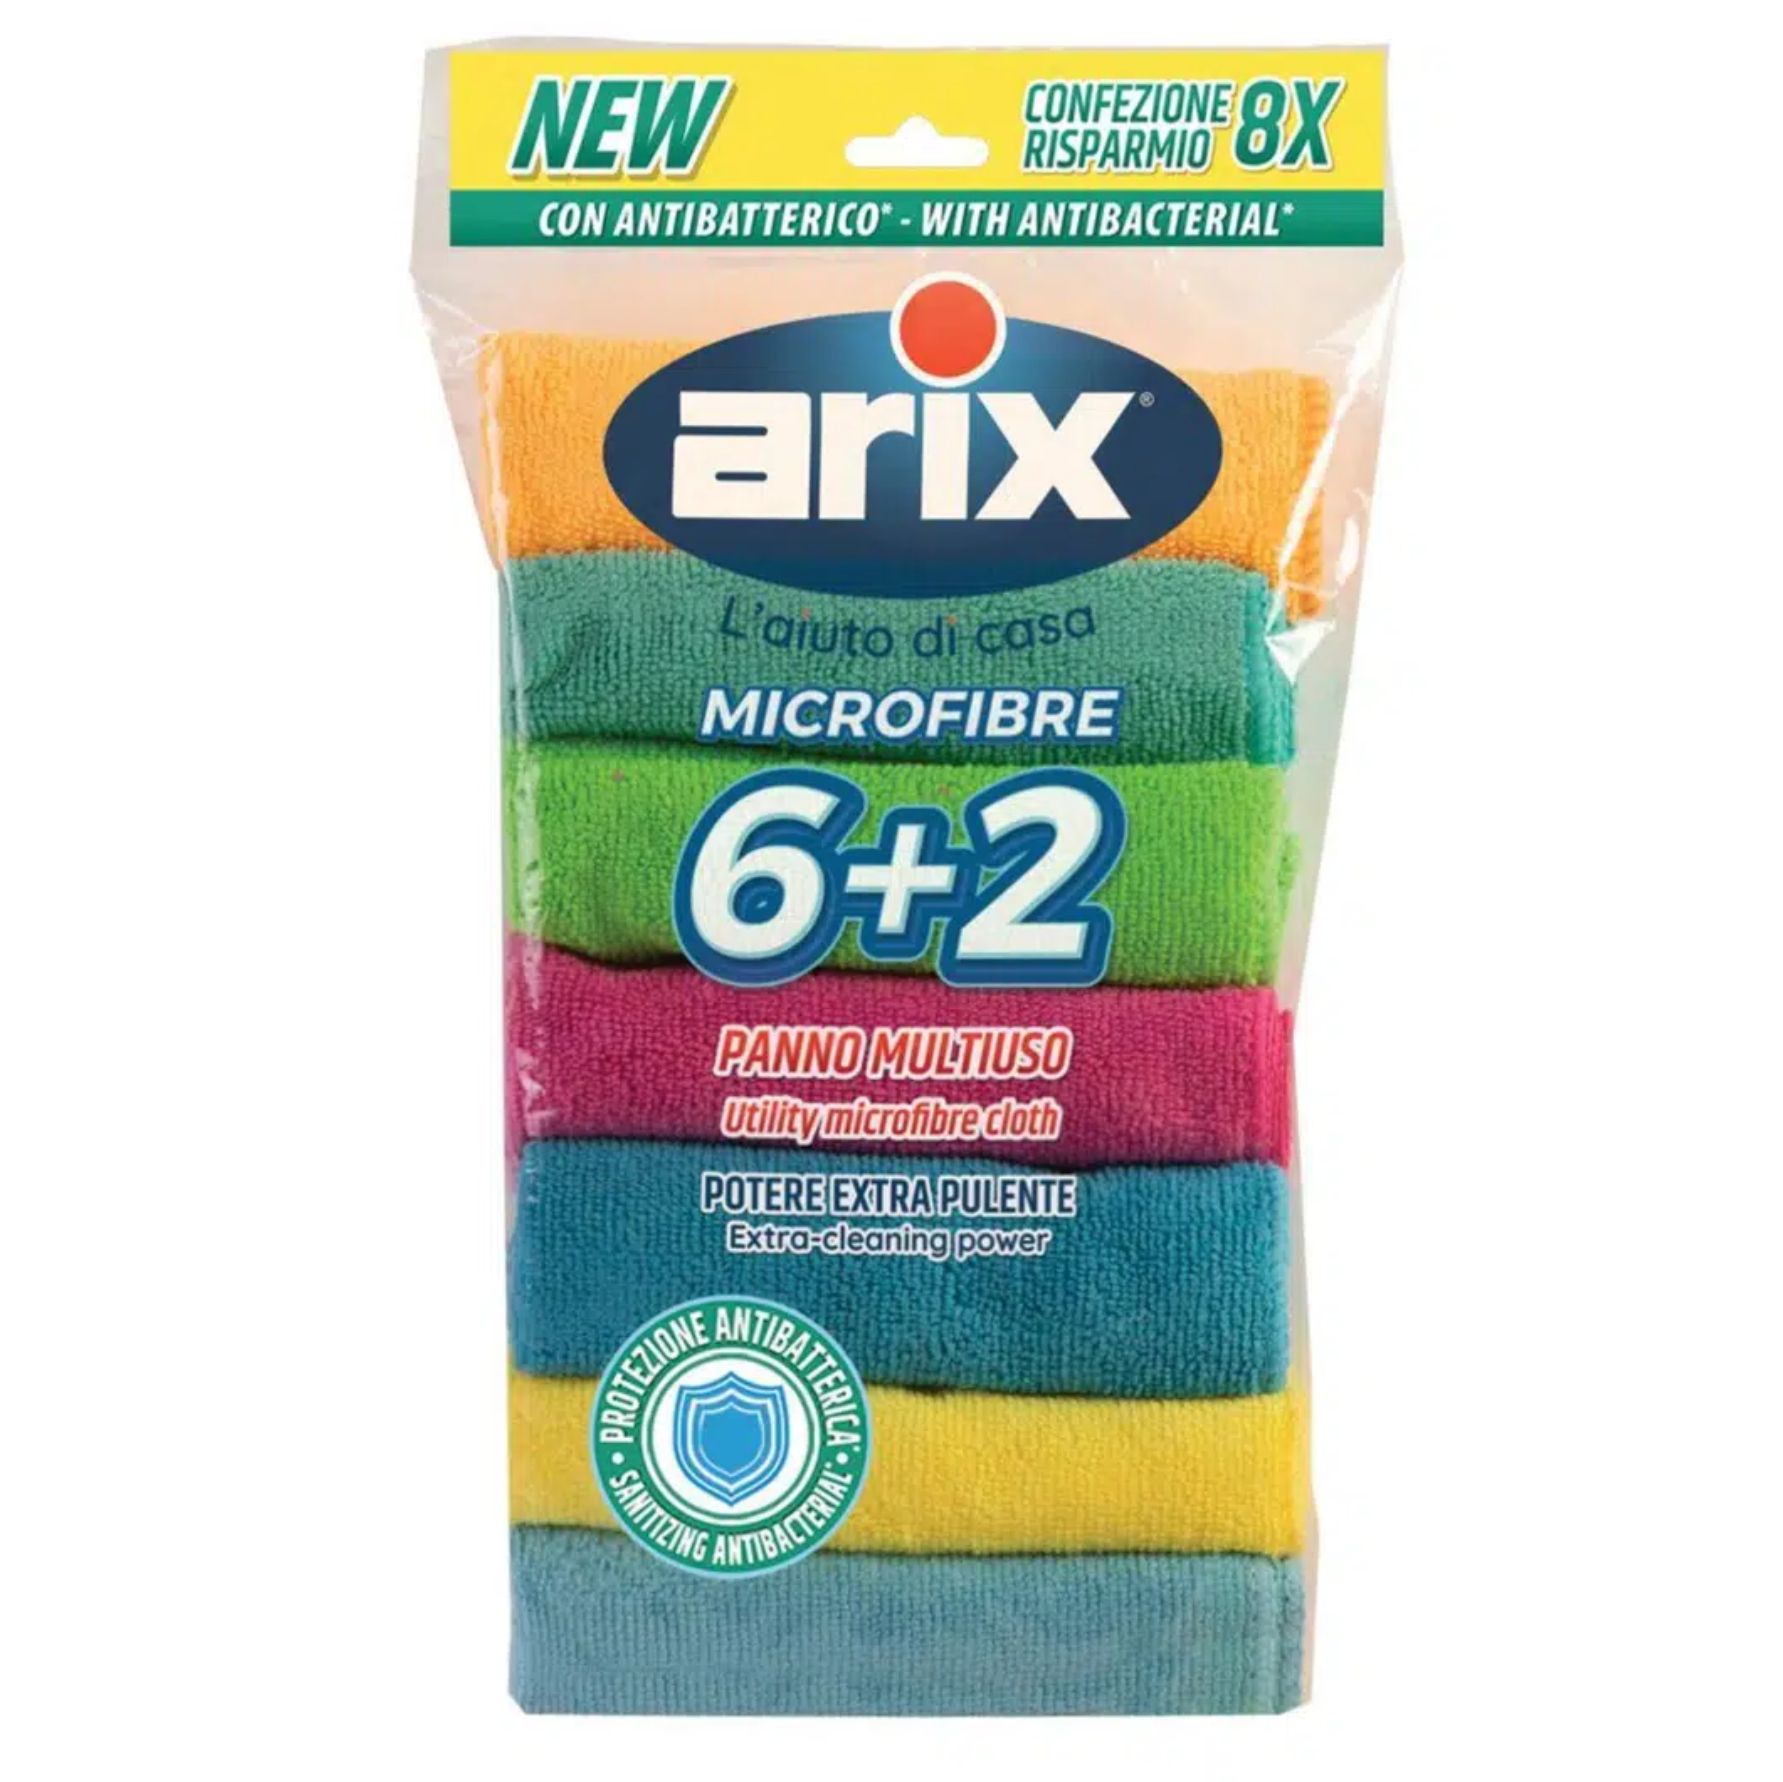 ARIX ANTI-BACTERIAL MULTIPURPOSE Microfibre Cloth 8PC/PACK